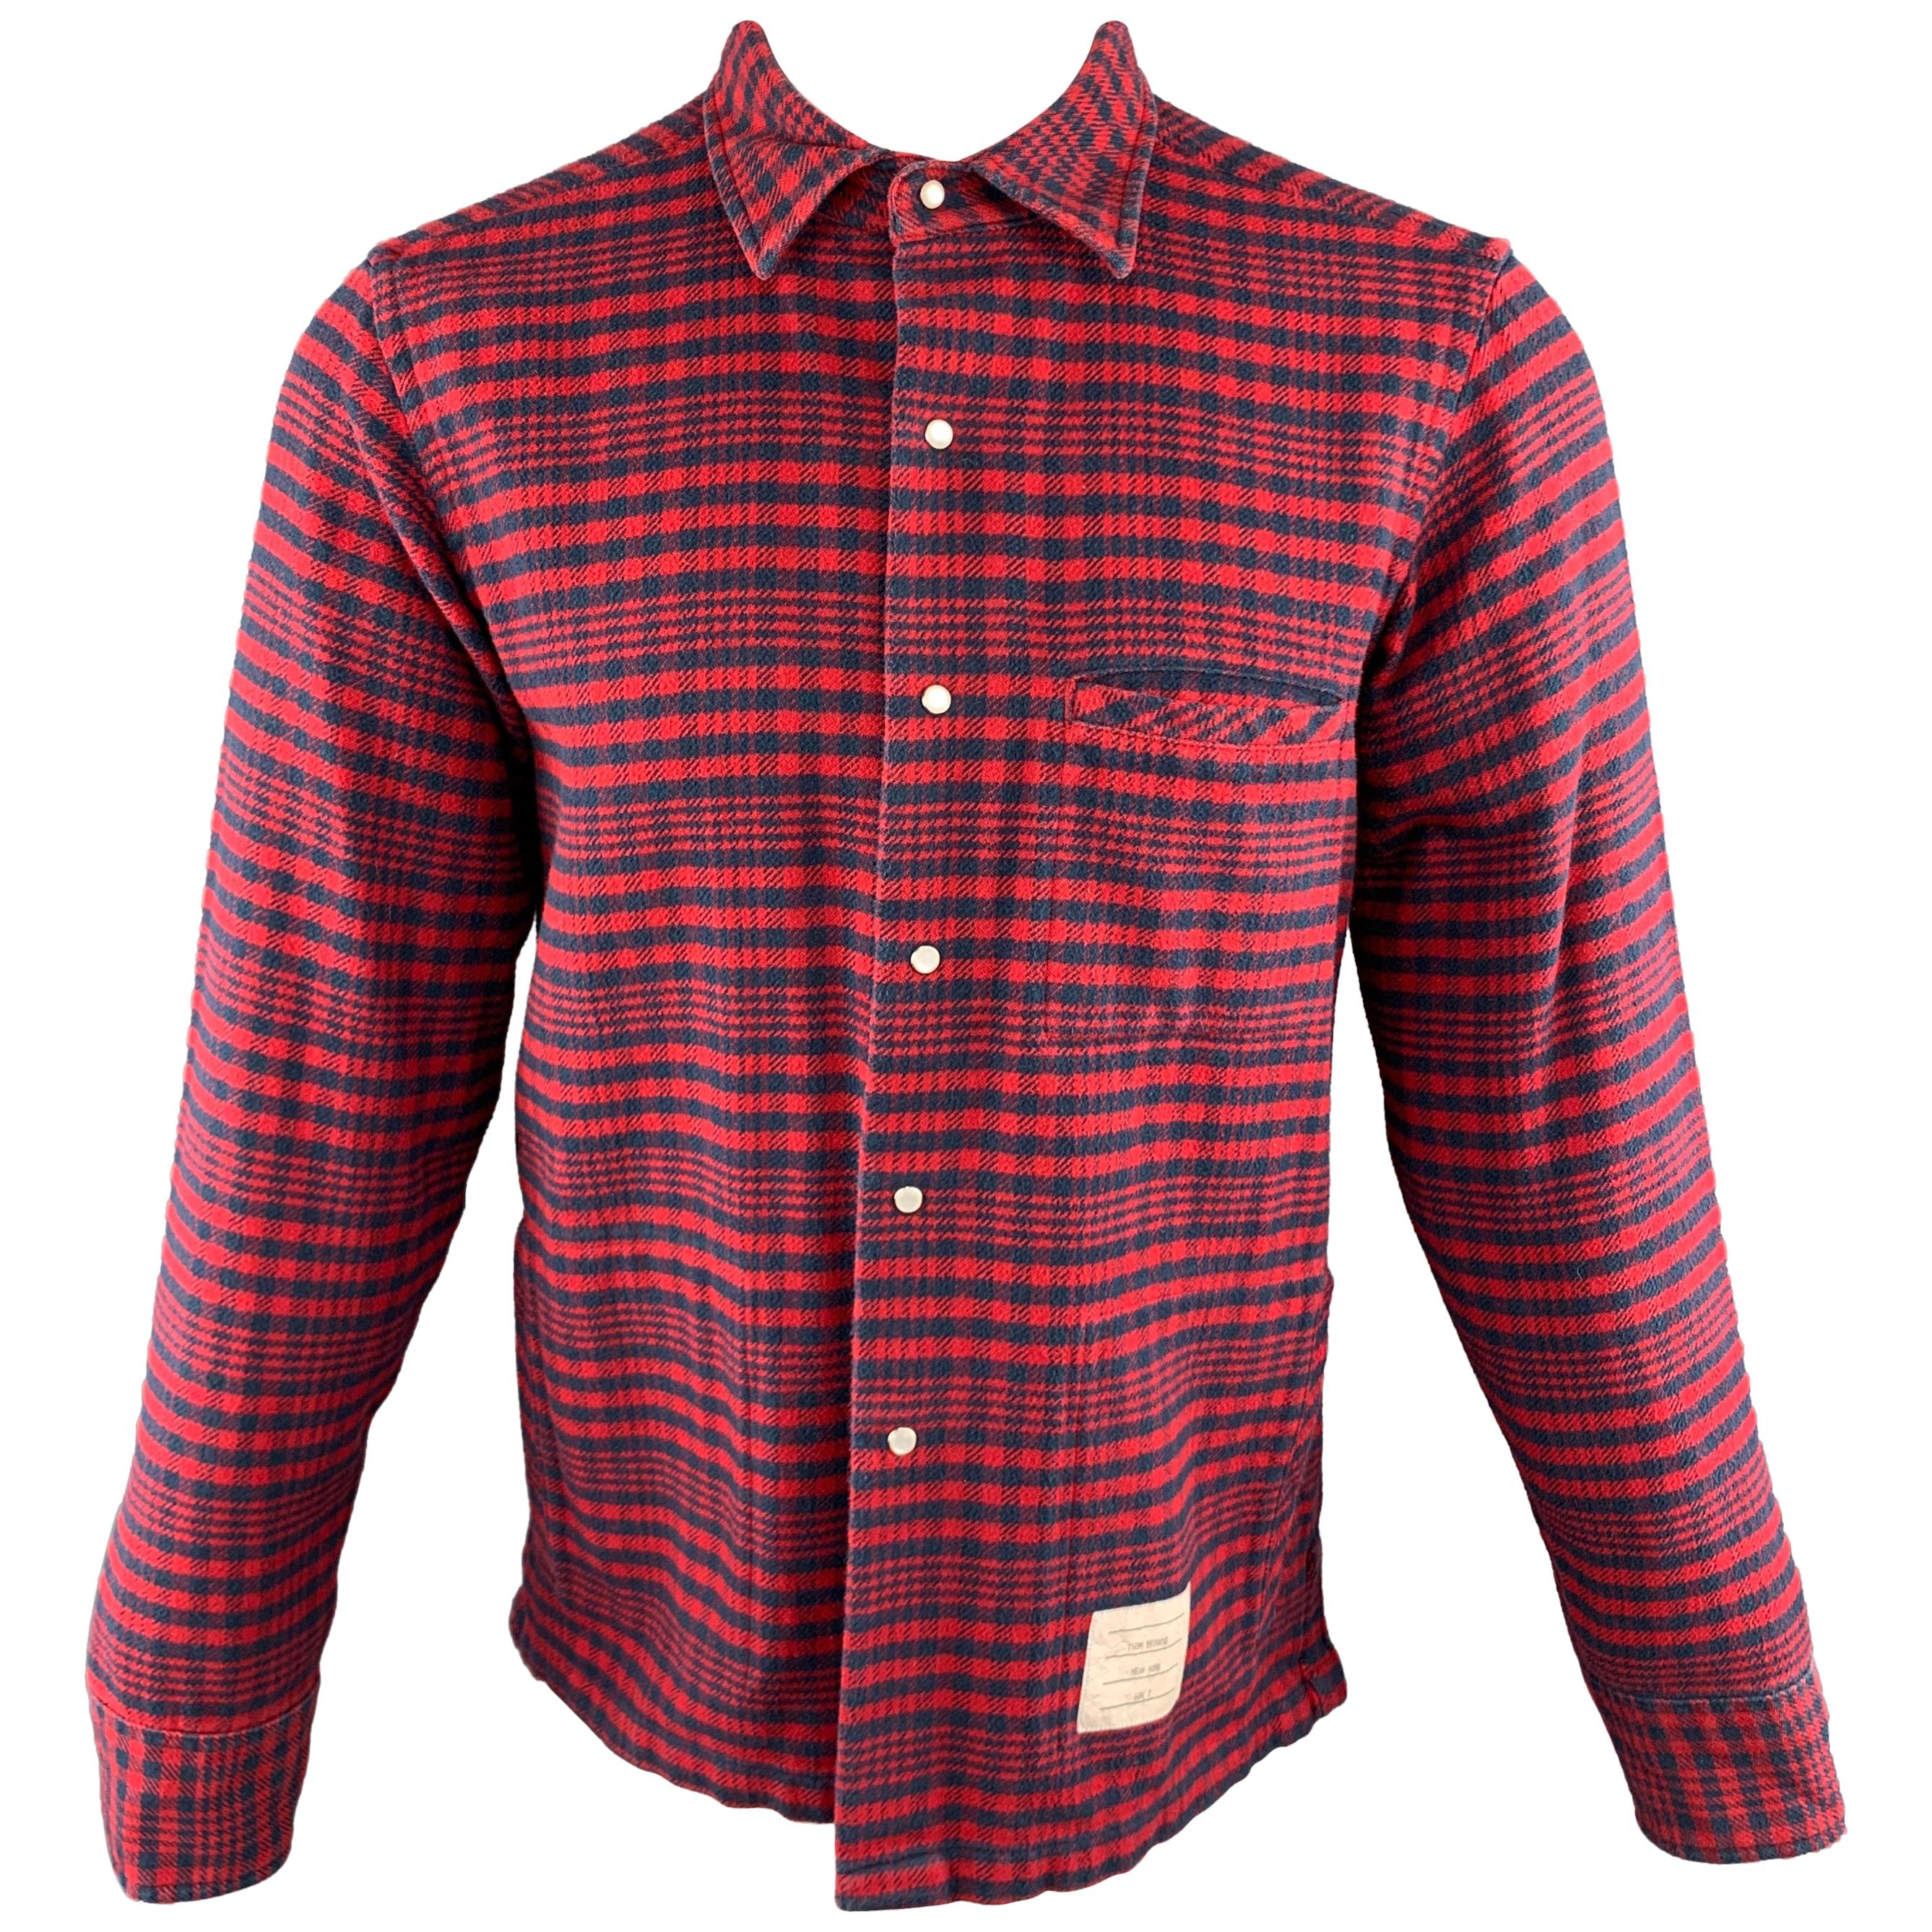 THOM BROWNE Size M Red & Navy Plaid Cotton Shirt Jacket Long Sleeve Shirt